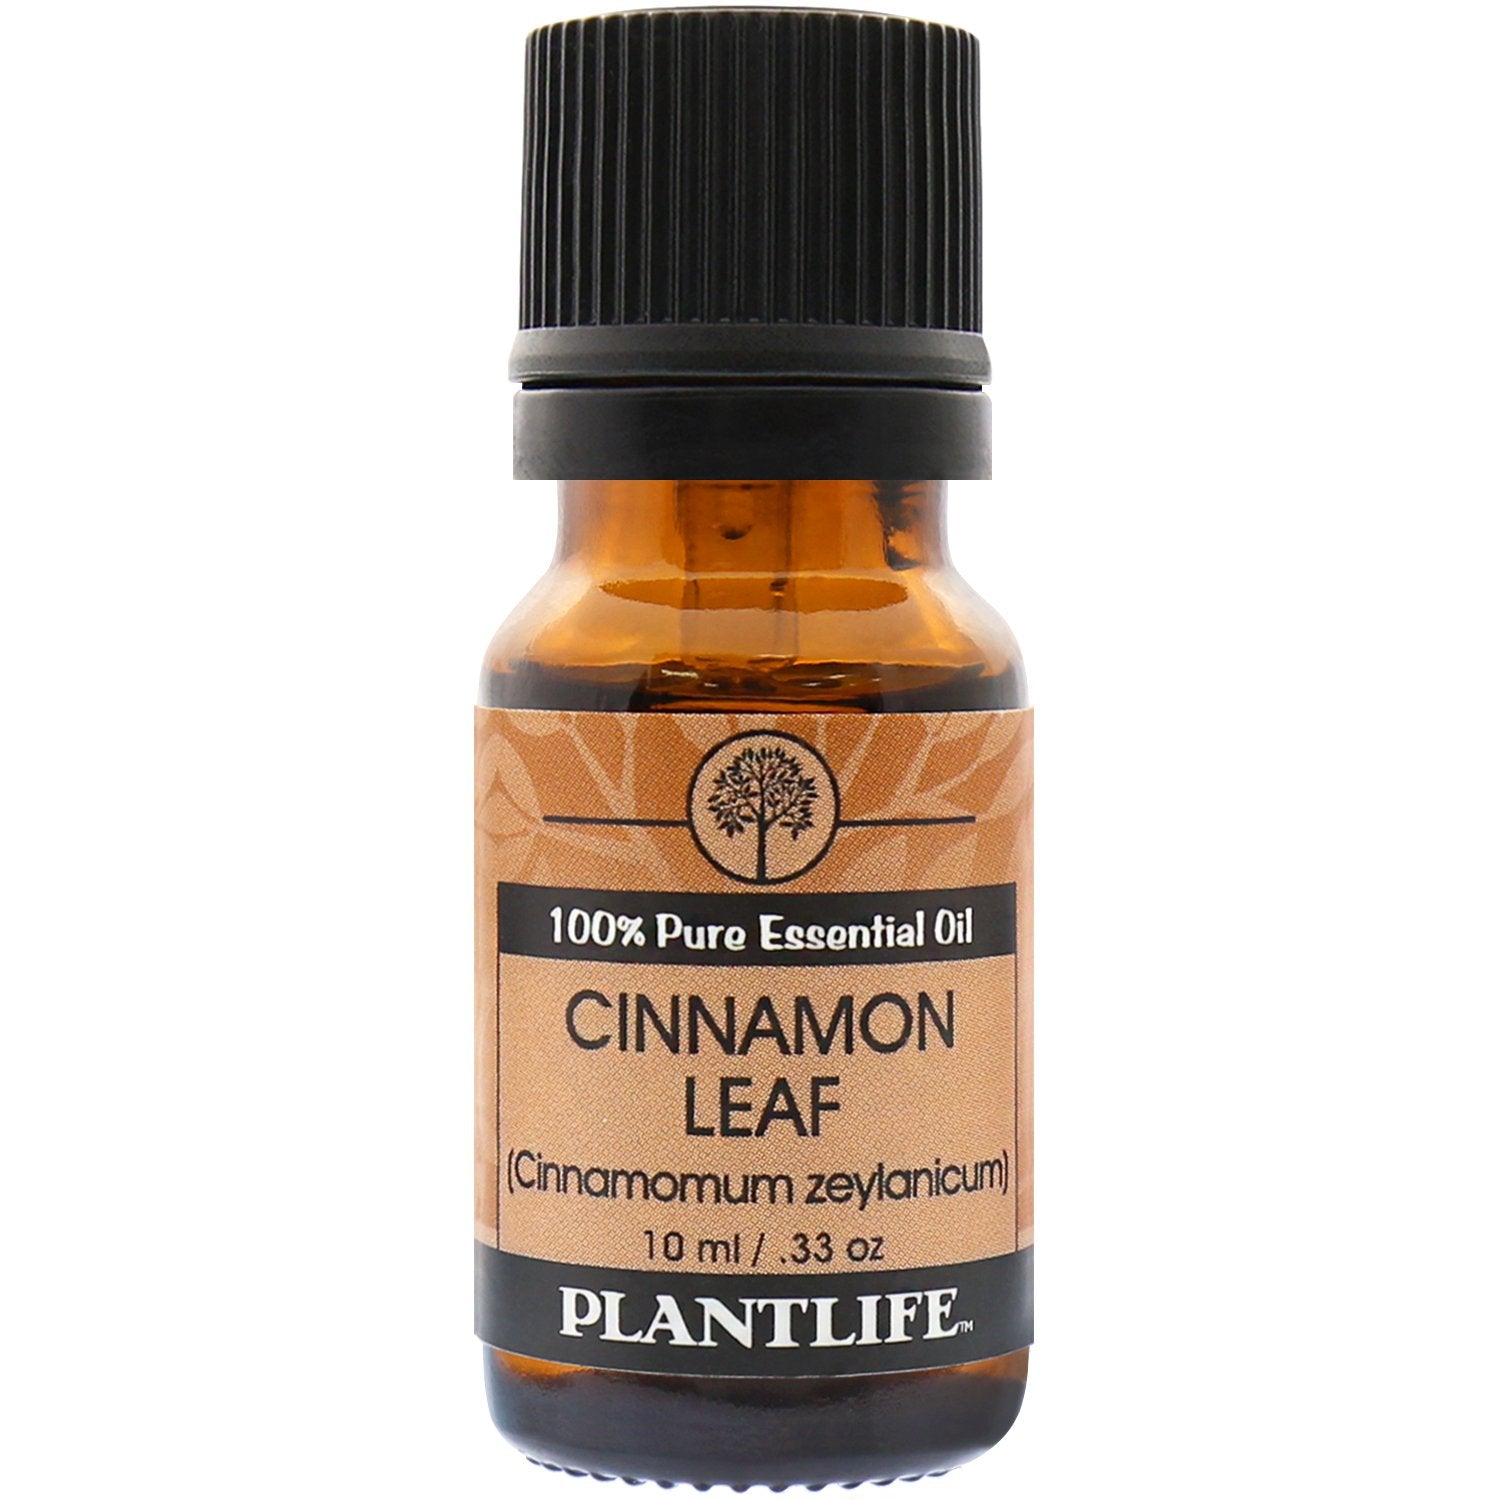 Cinnamon Leaf 100% Pure Essential Oil - 10 ml by Plantlife